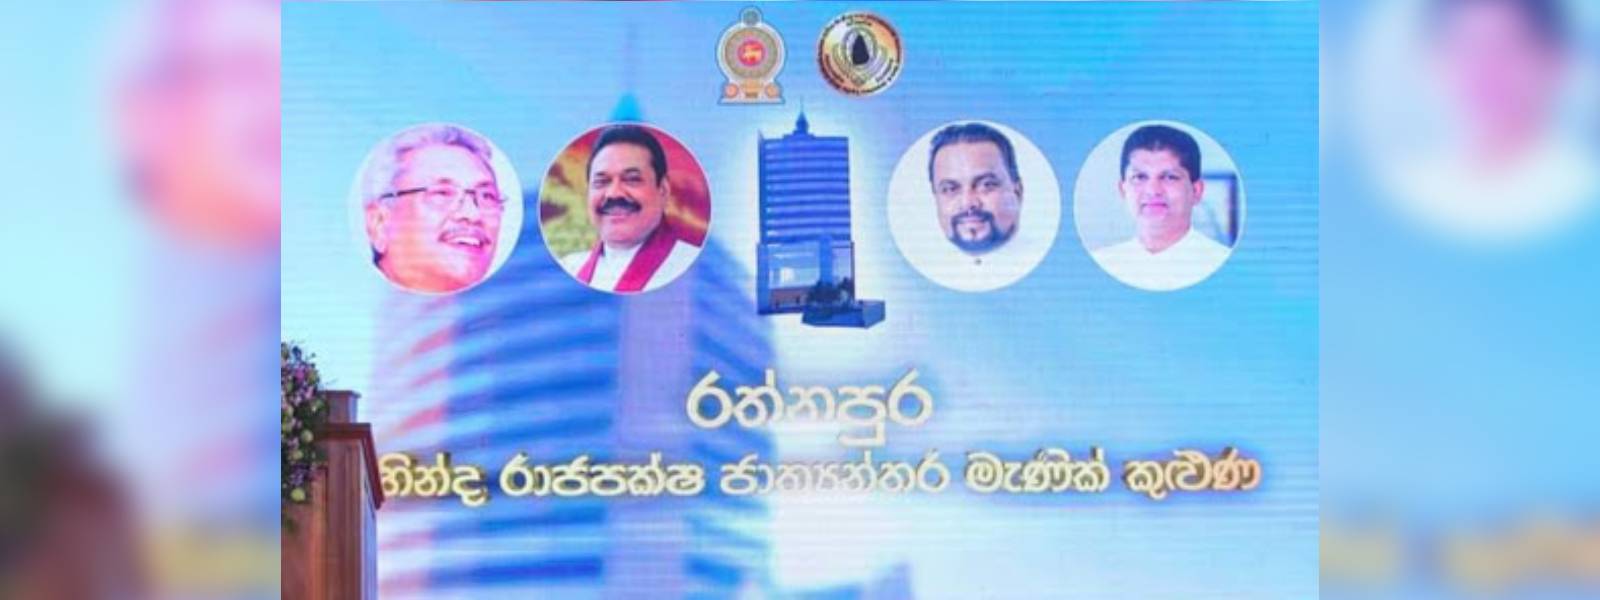 Construction of Mahinda Rajapaksa Gem Tower begins